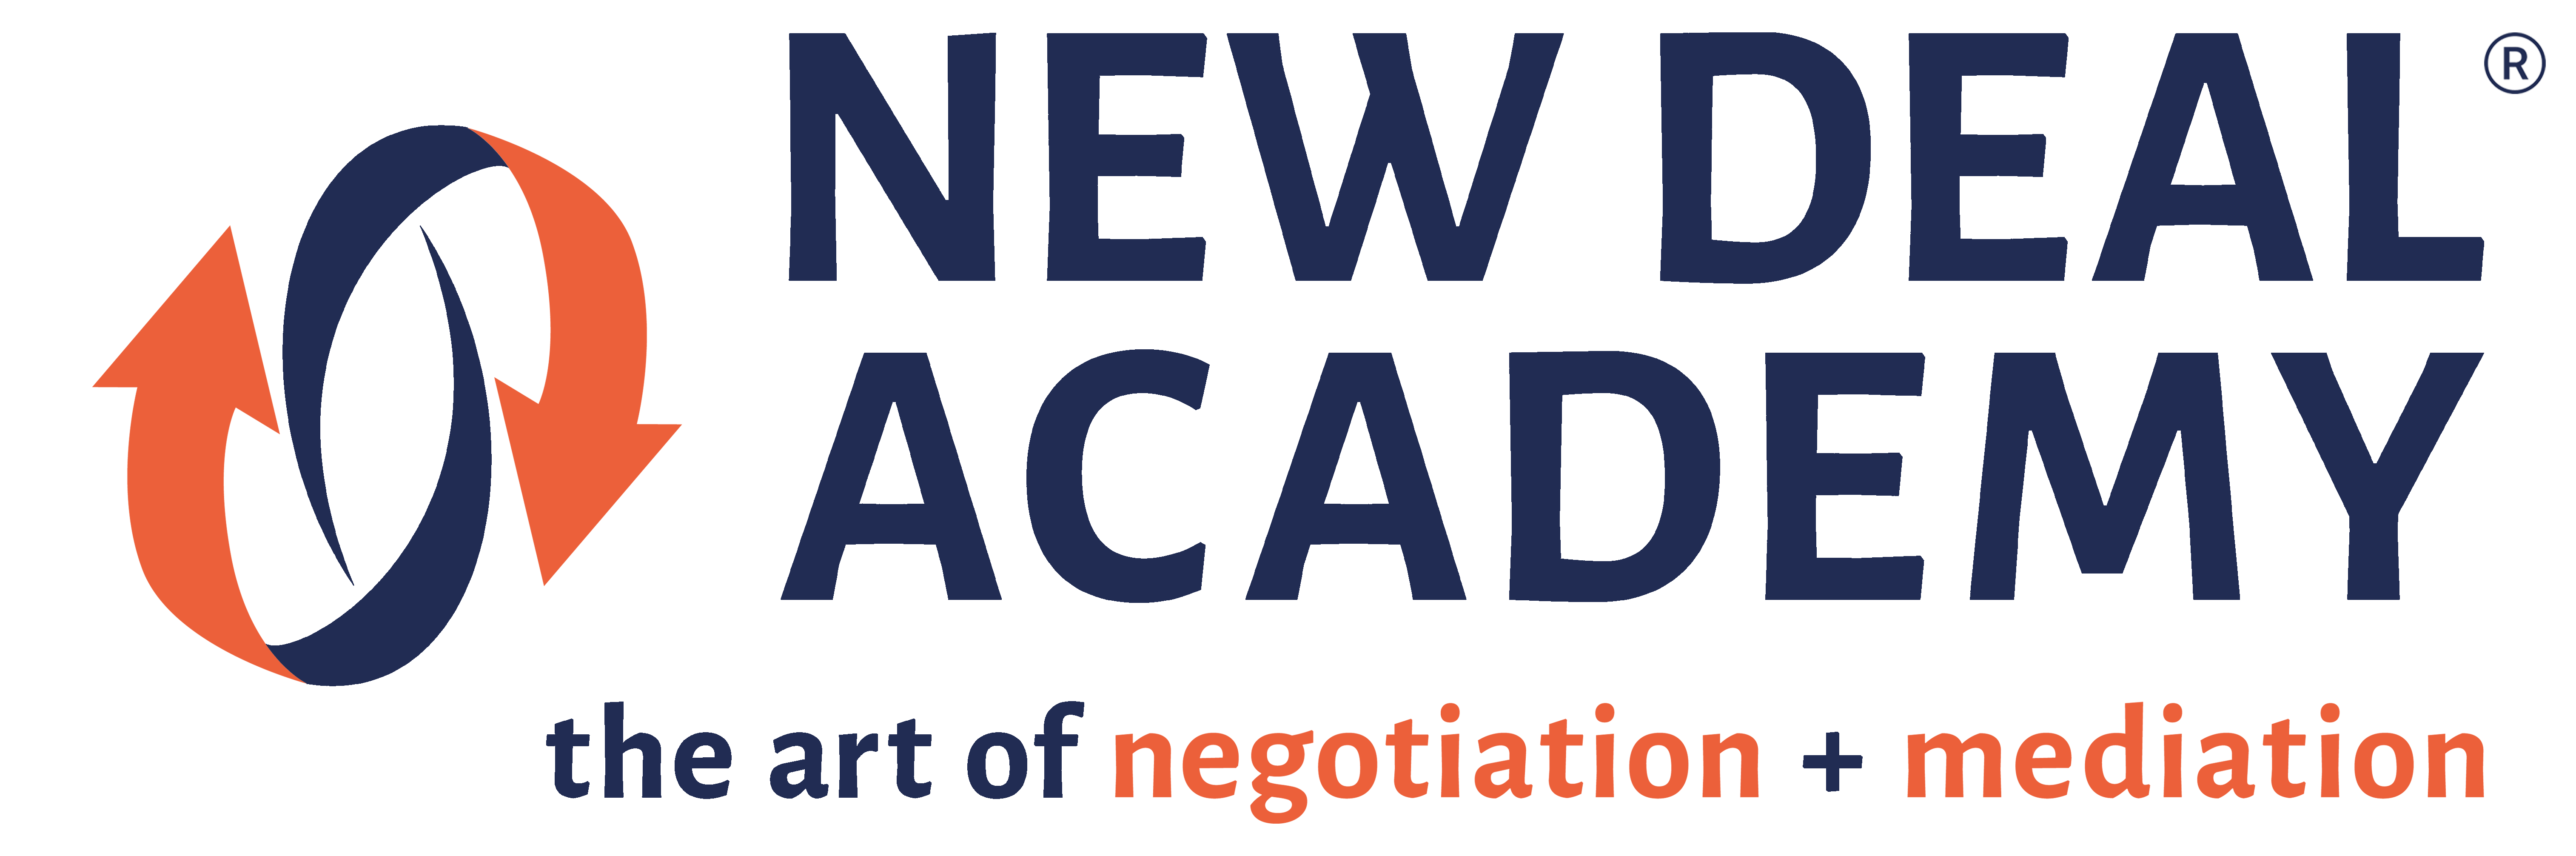 New Deal Academy